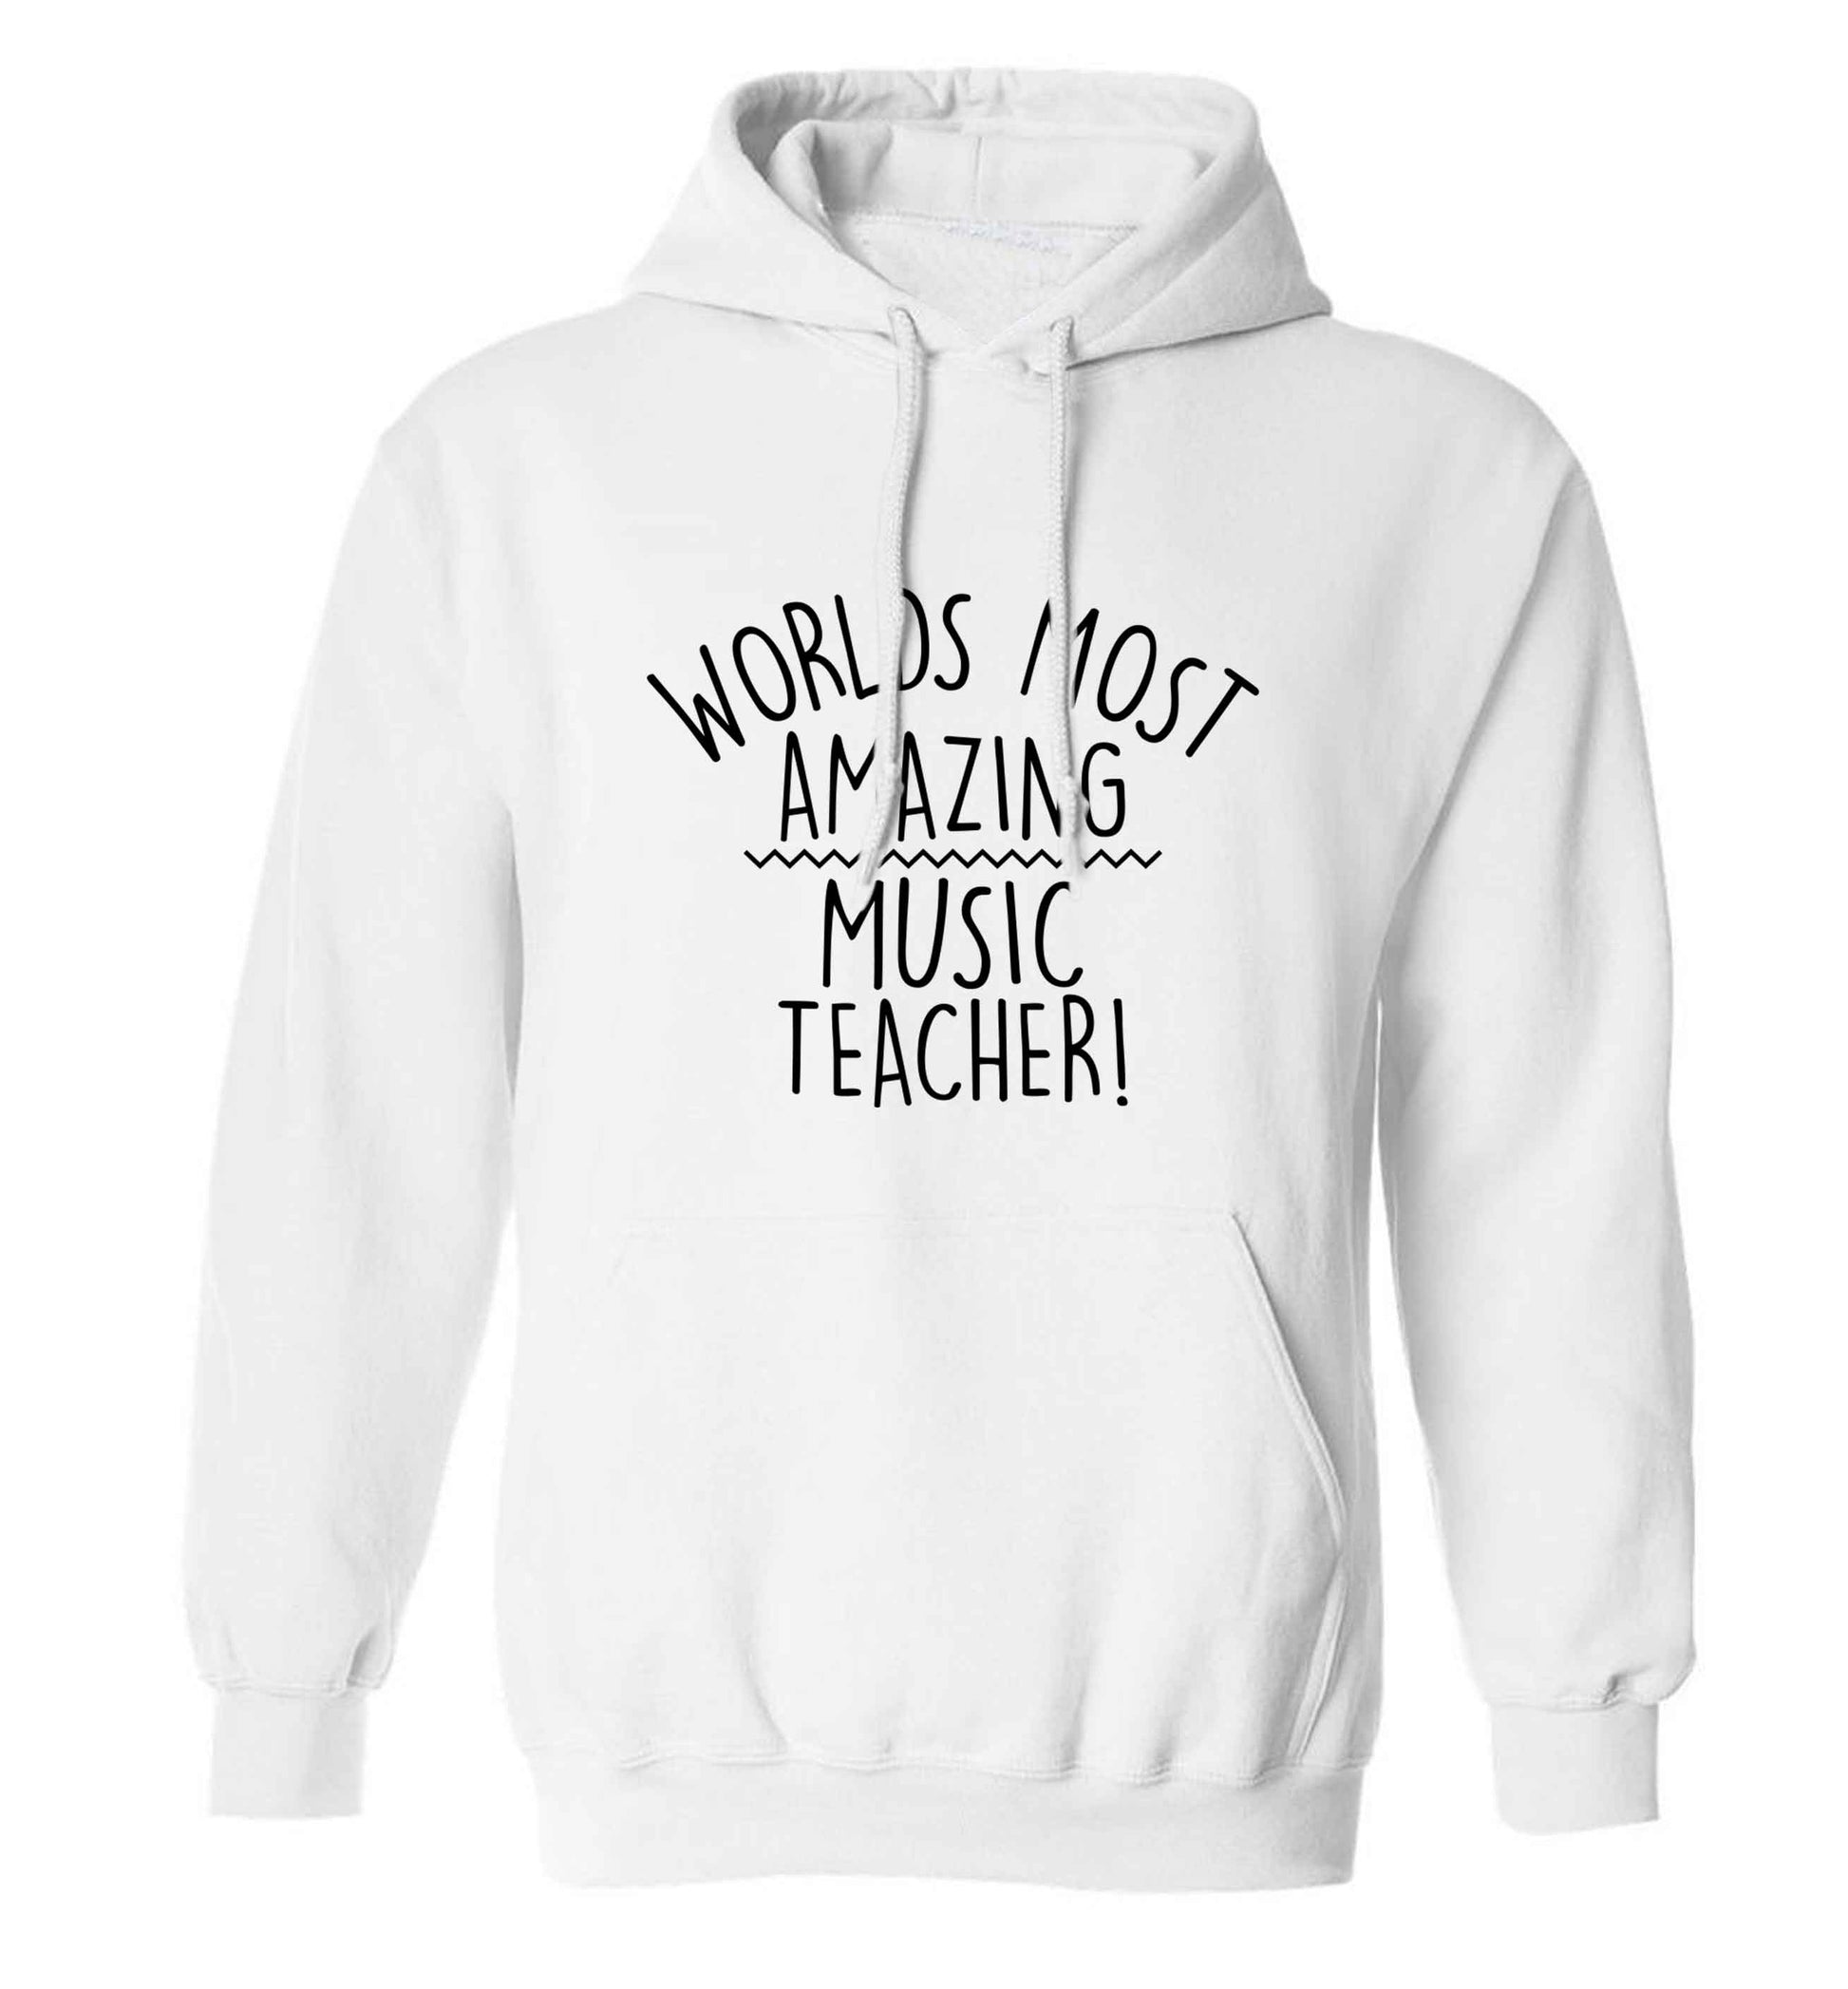 Worlds most amazing music teacher adults unisex white hoodie 2XL